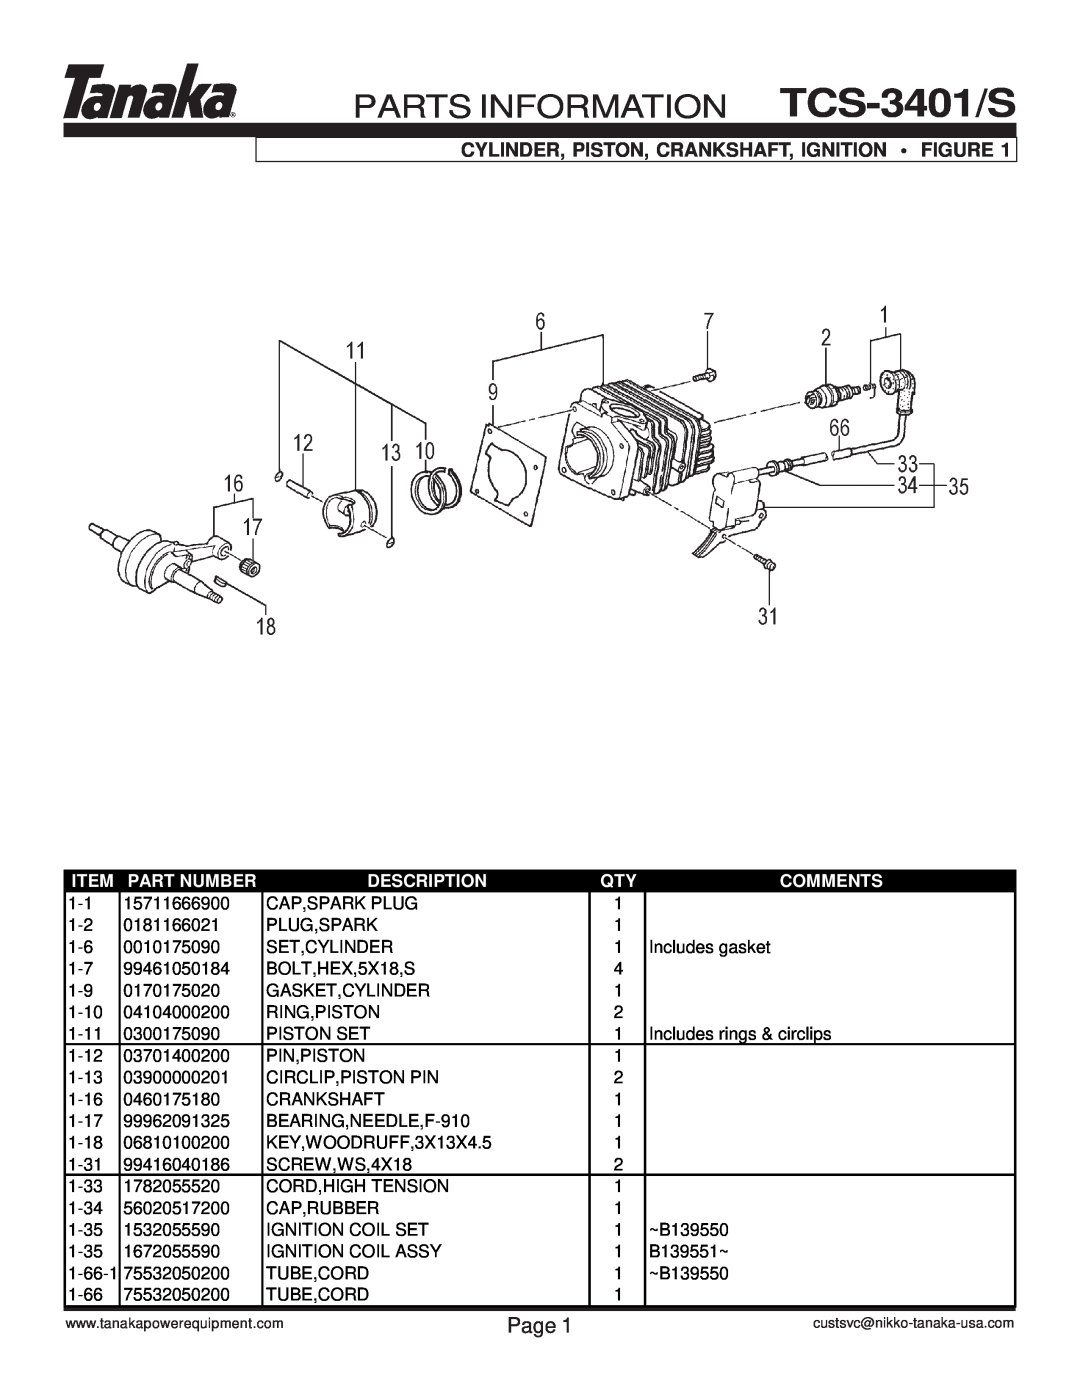 Tanaka PARTS INFORMATION TCS-3401/S, Cylinder, Piston, Crankshaft, Ignition Figure, Page, Part Number, Description 